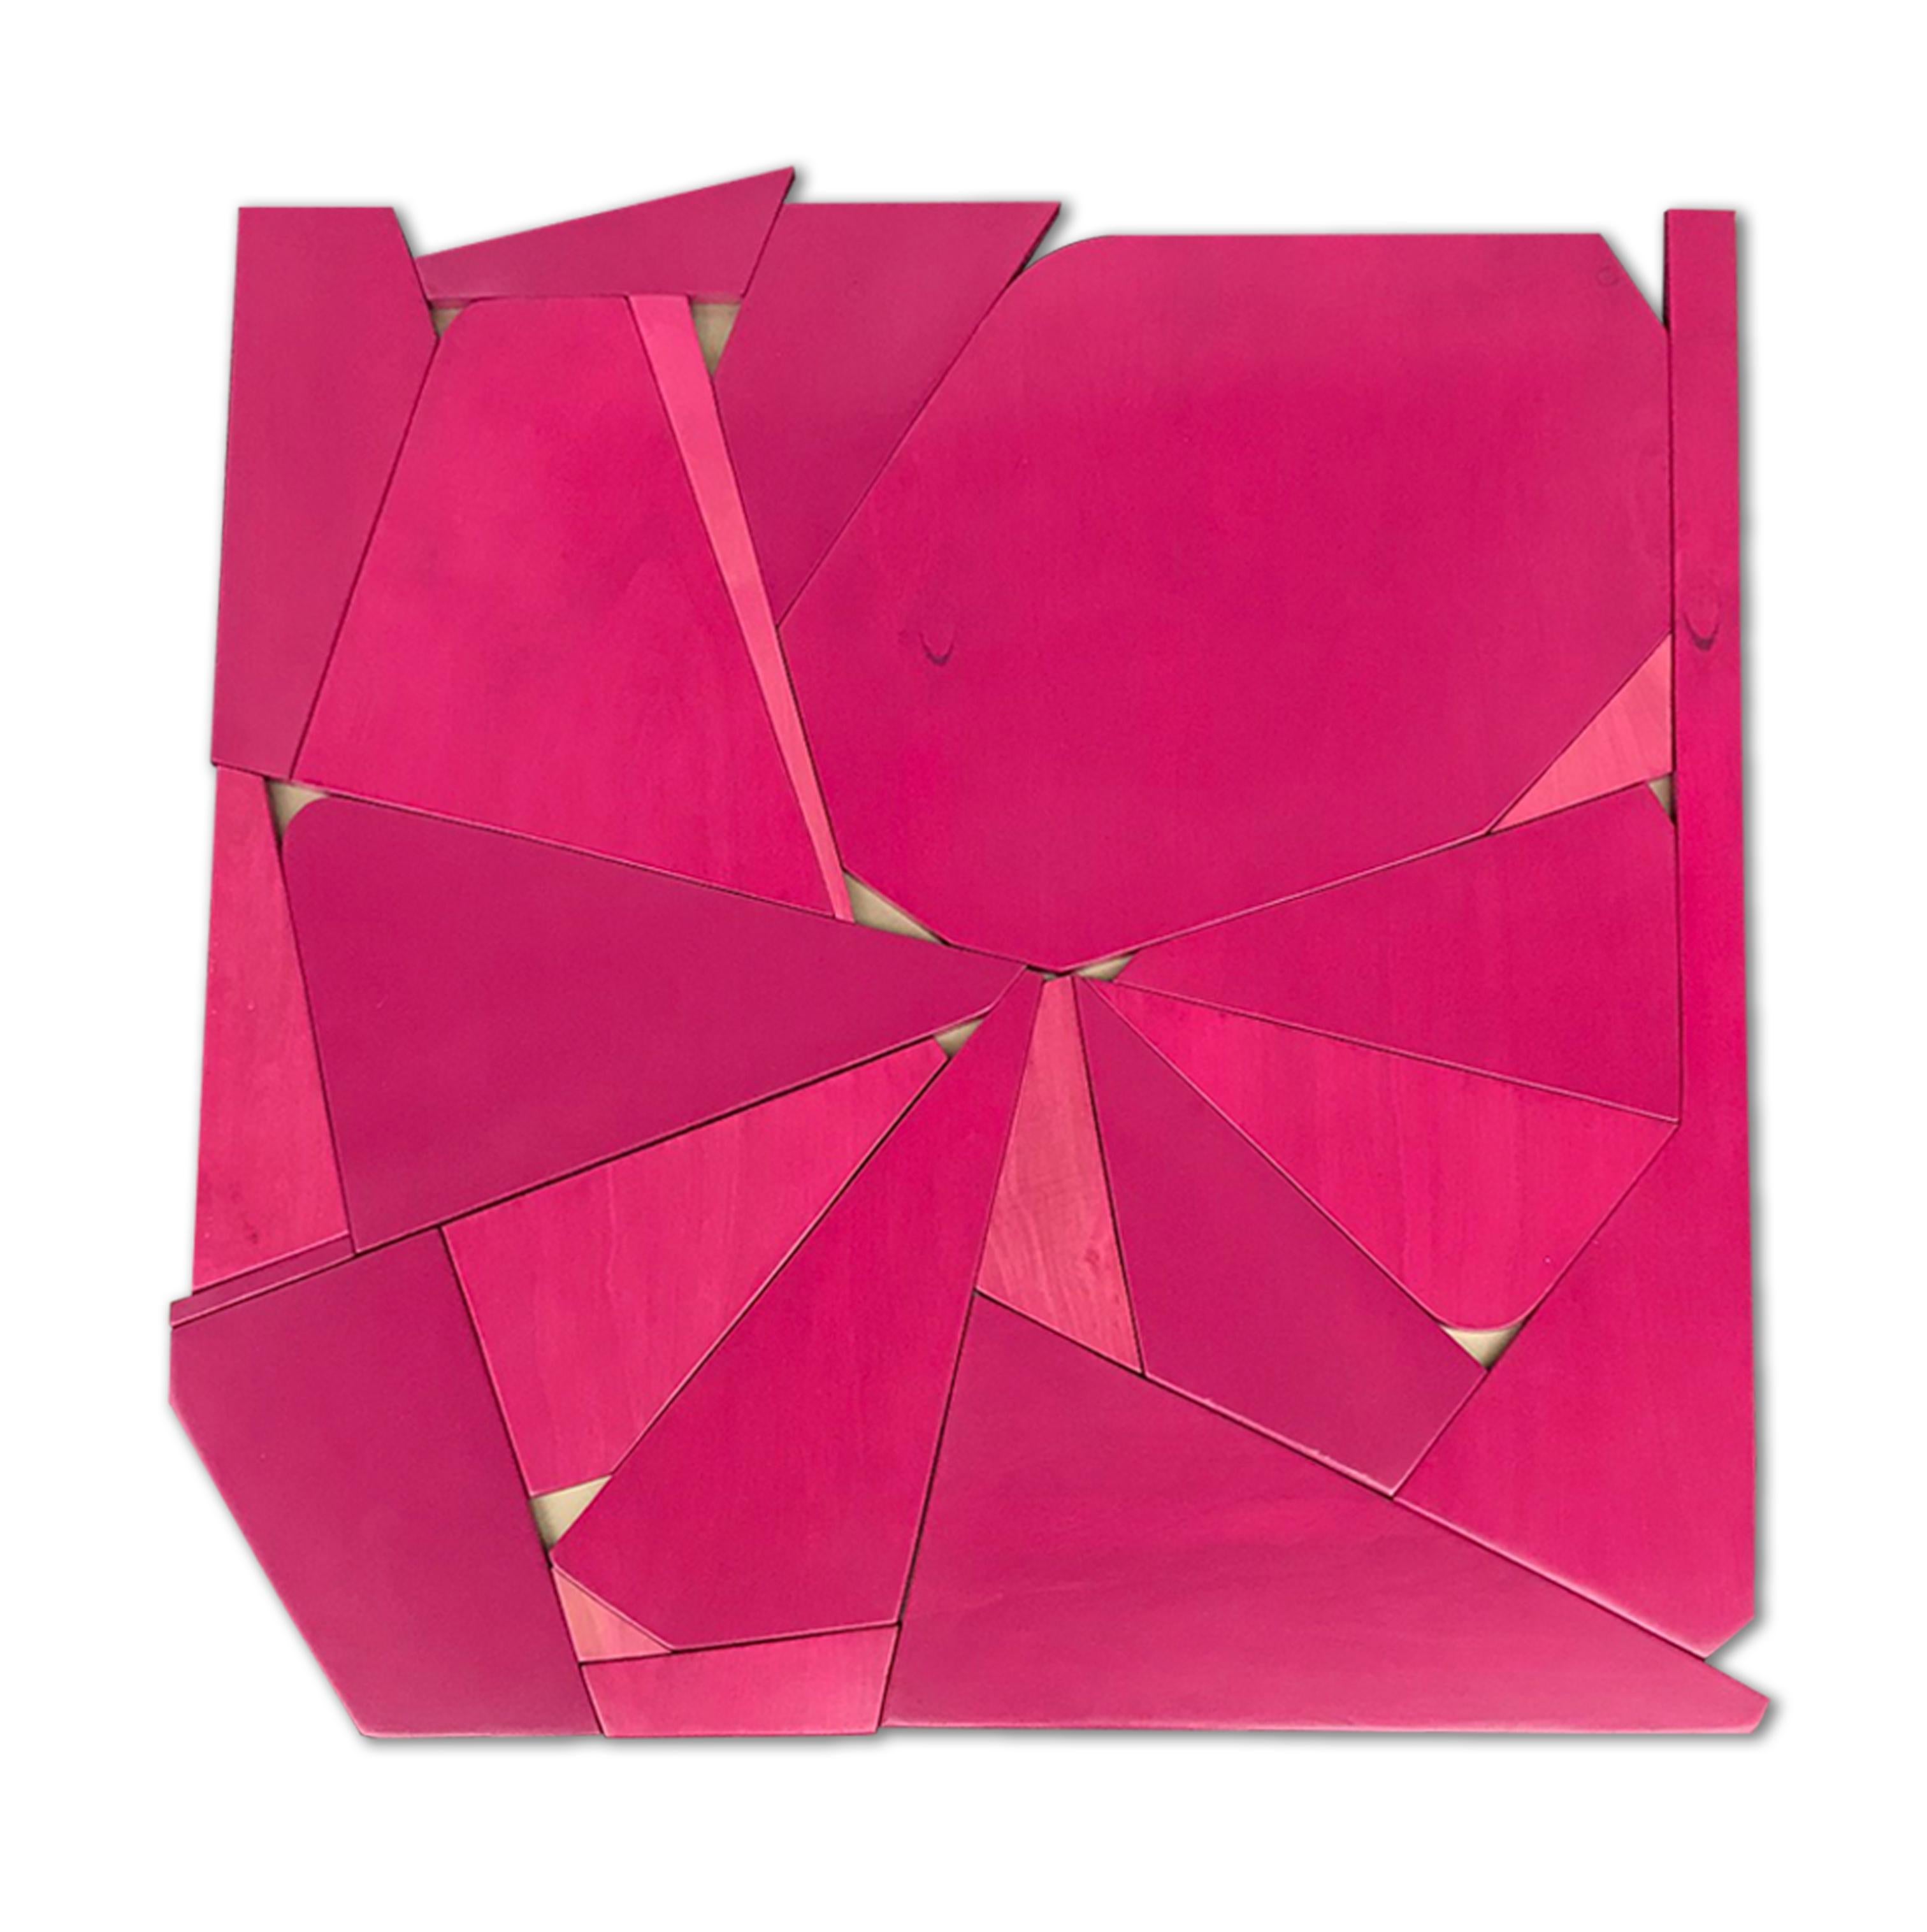 "Pinwheel" Wandskulptur -Holz, rosa, monochrom, magenta, mcm